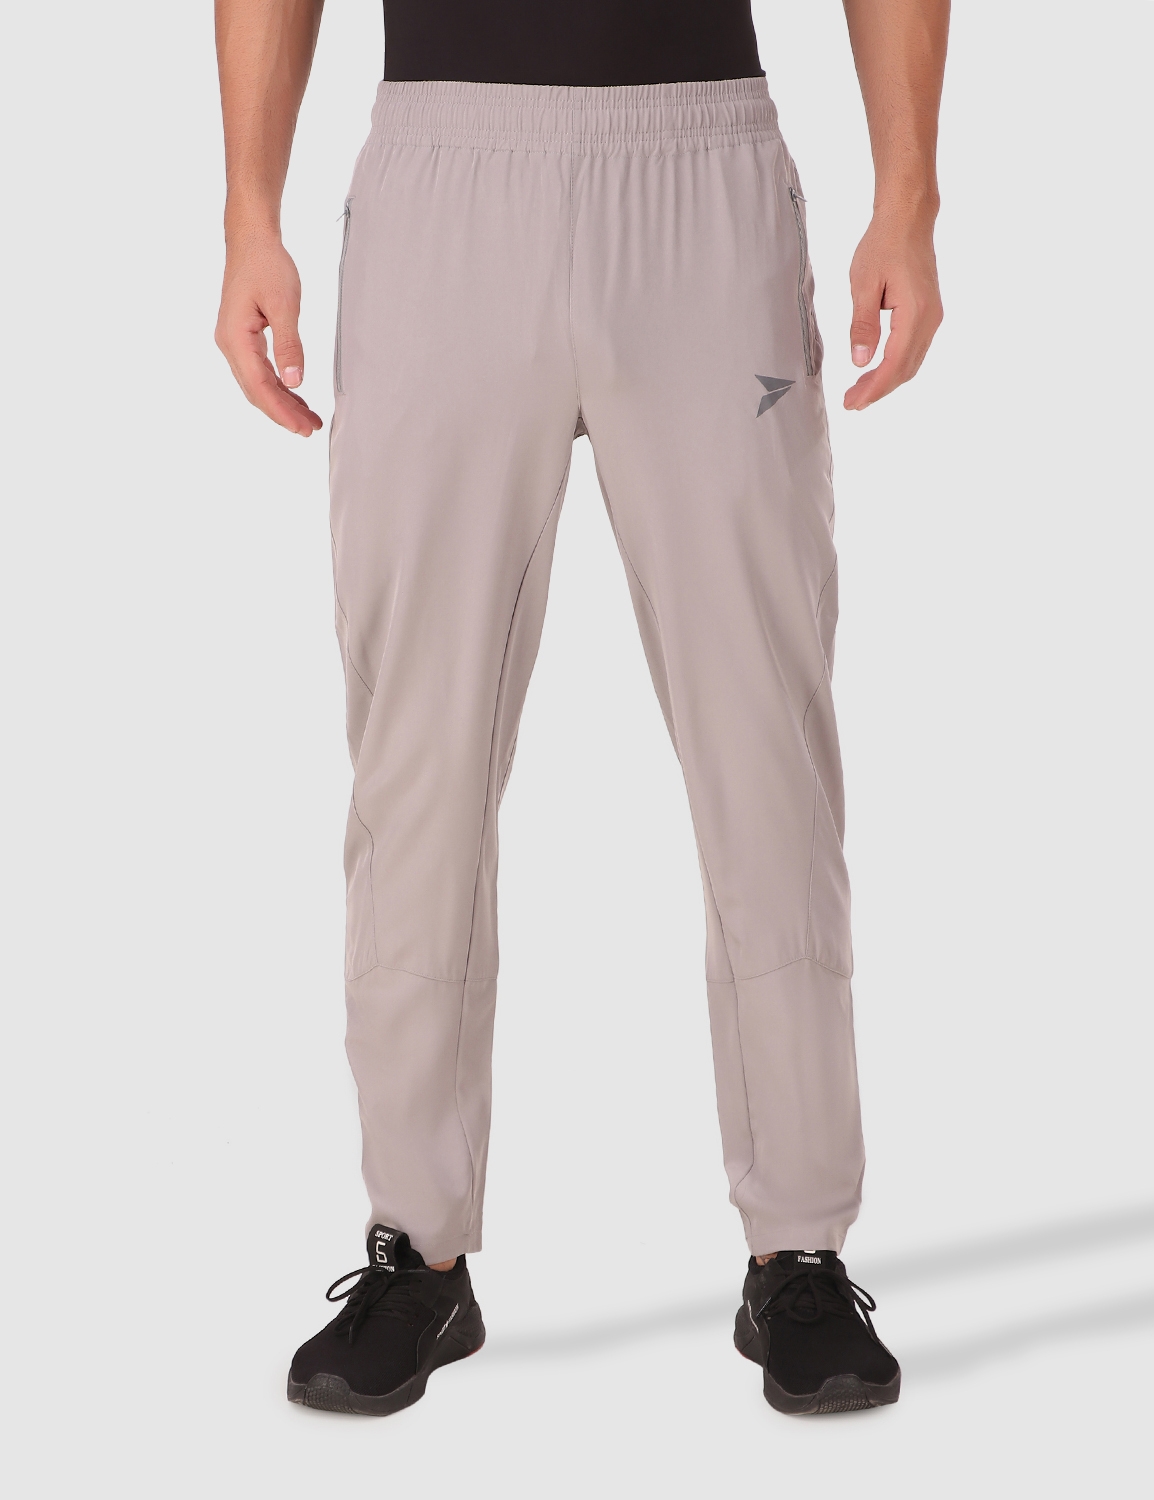 Fitinc NS Lycra Regular Fit Light Grey Track pant for Men